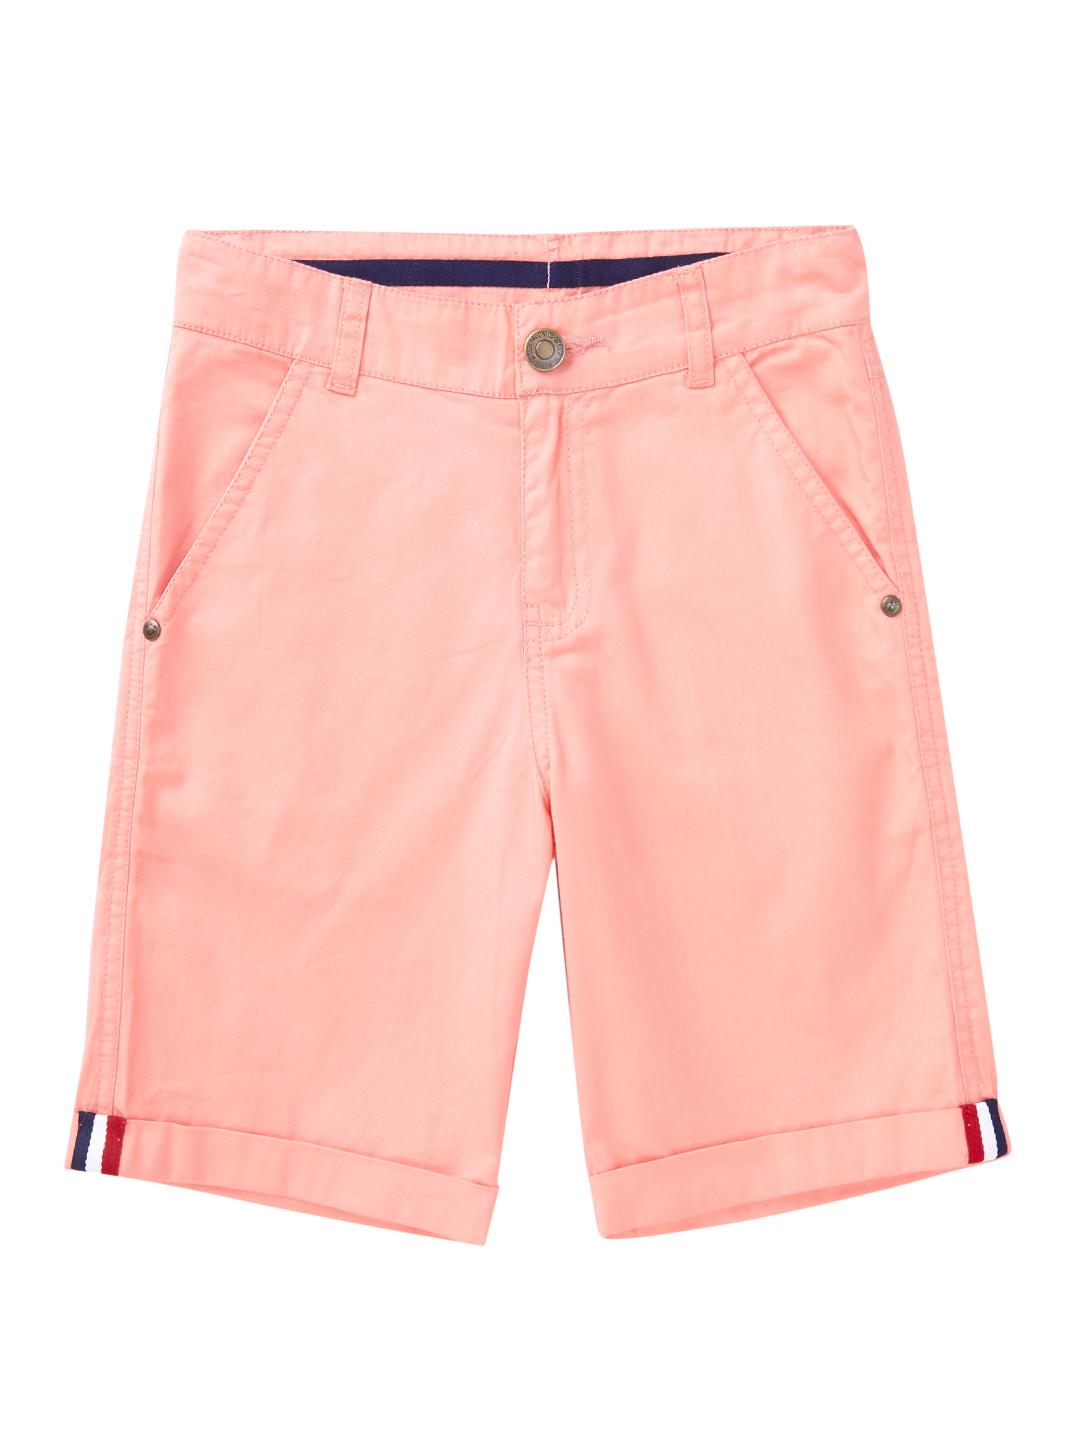 Boys Regular Fit Cotton Fashion Shorts, Peach